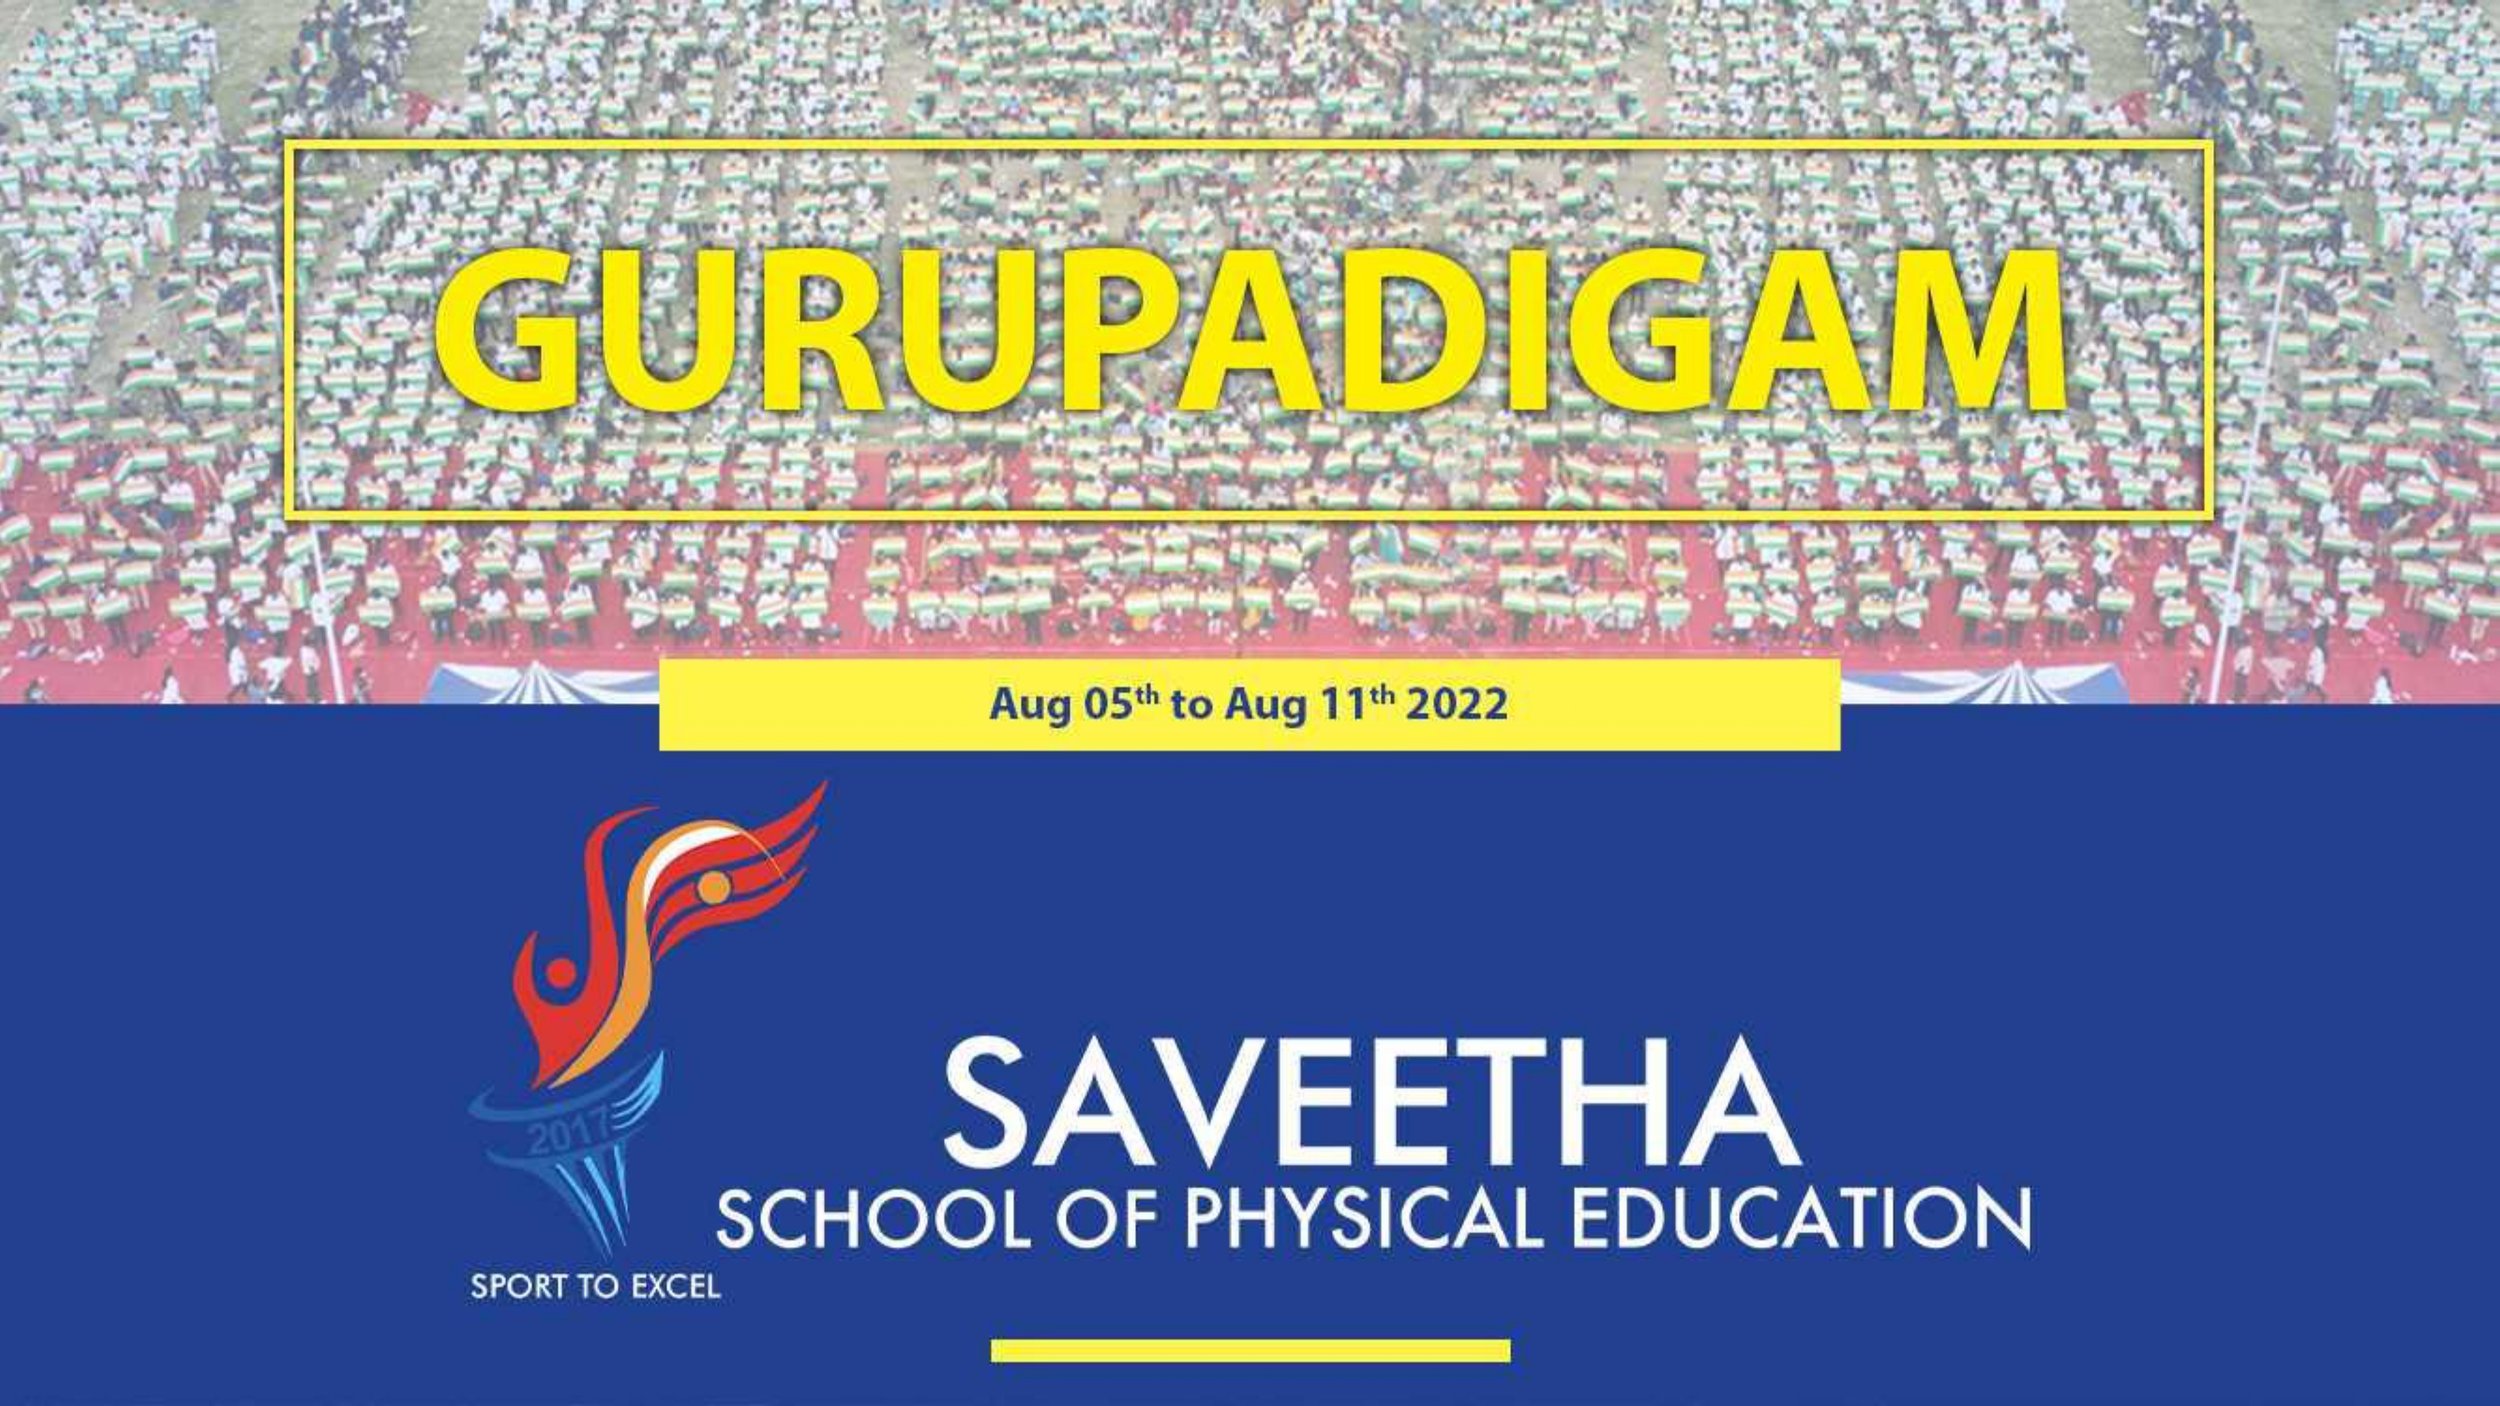 SSPED Gurupadigam Aug 05th to11th 2022_page-0001.jpg